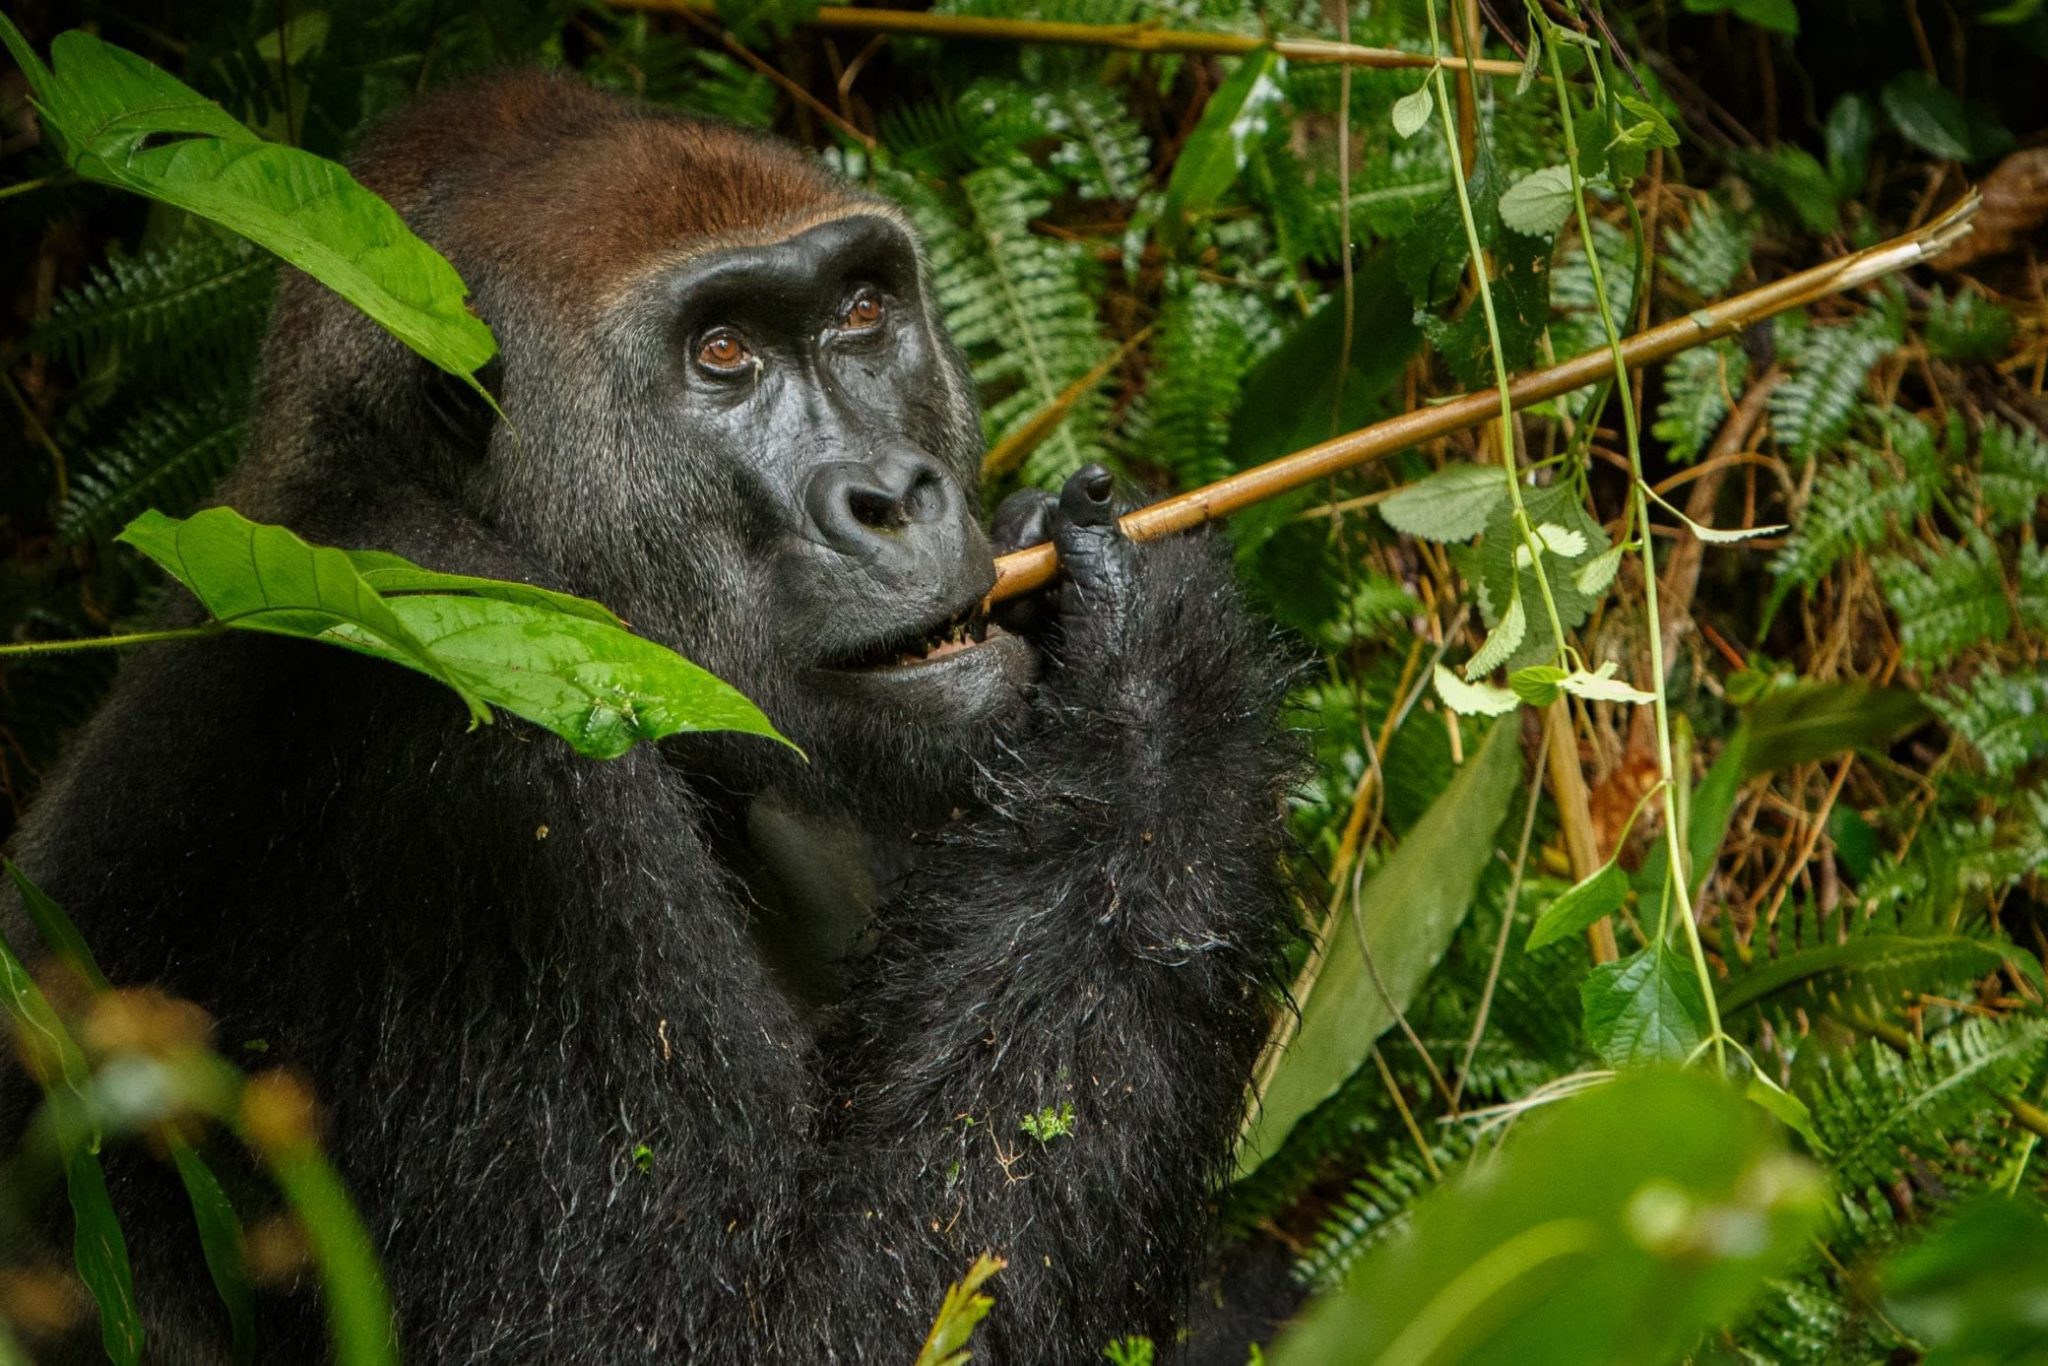 Gorillas in Africa